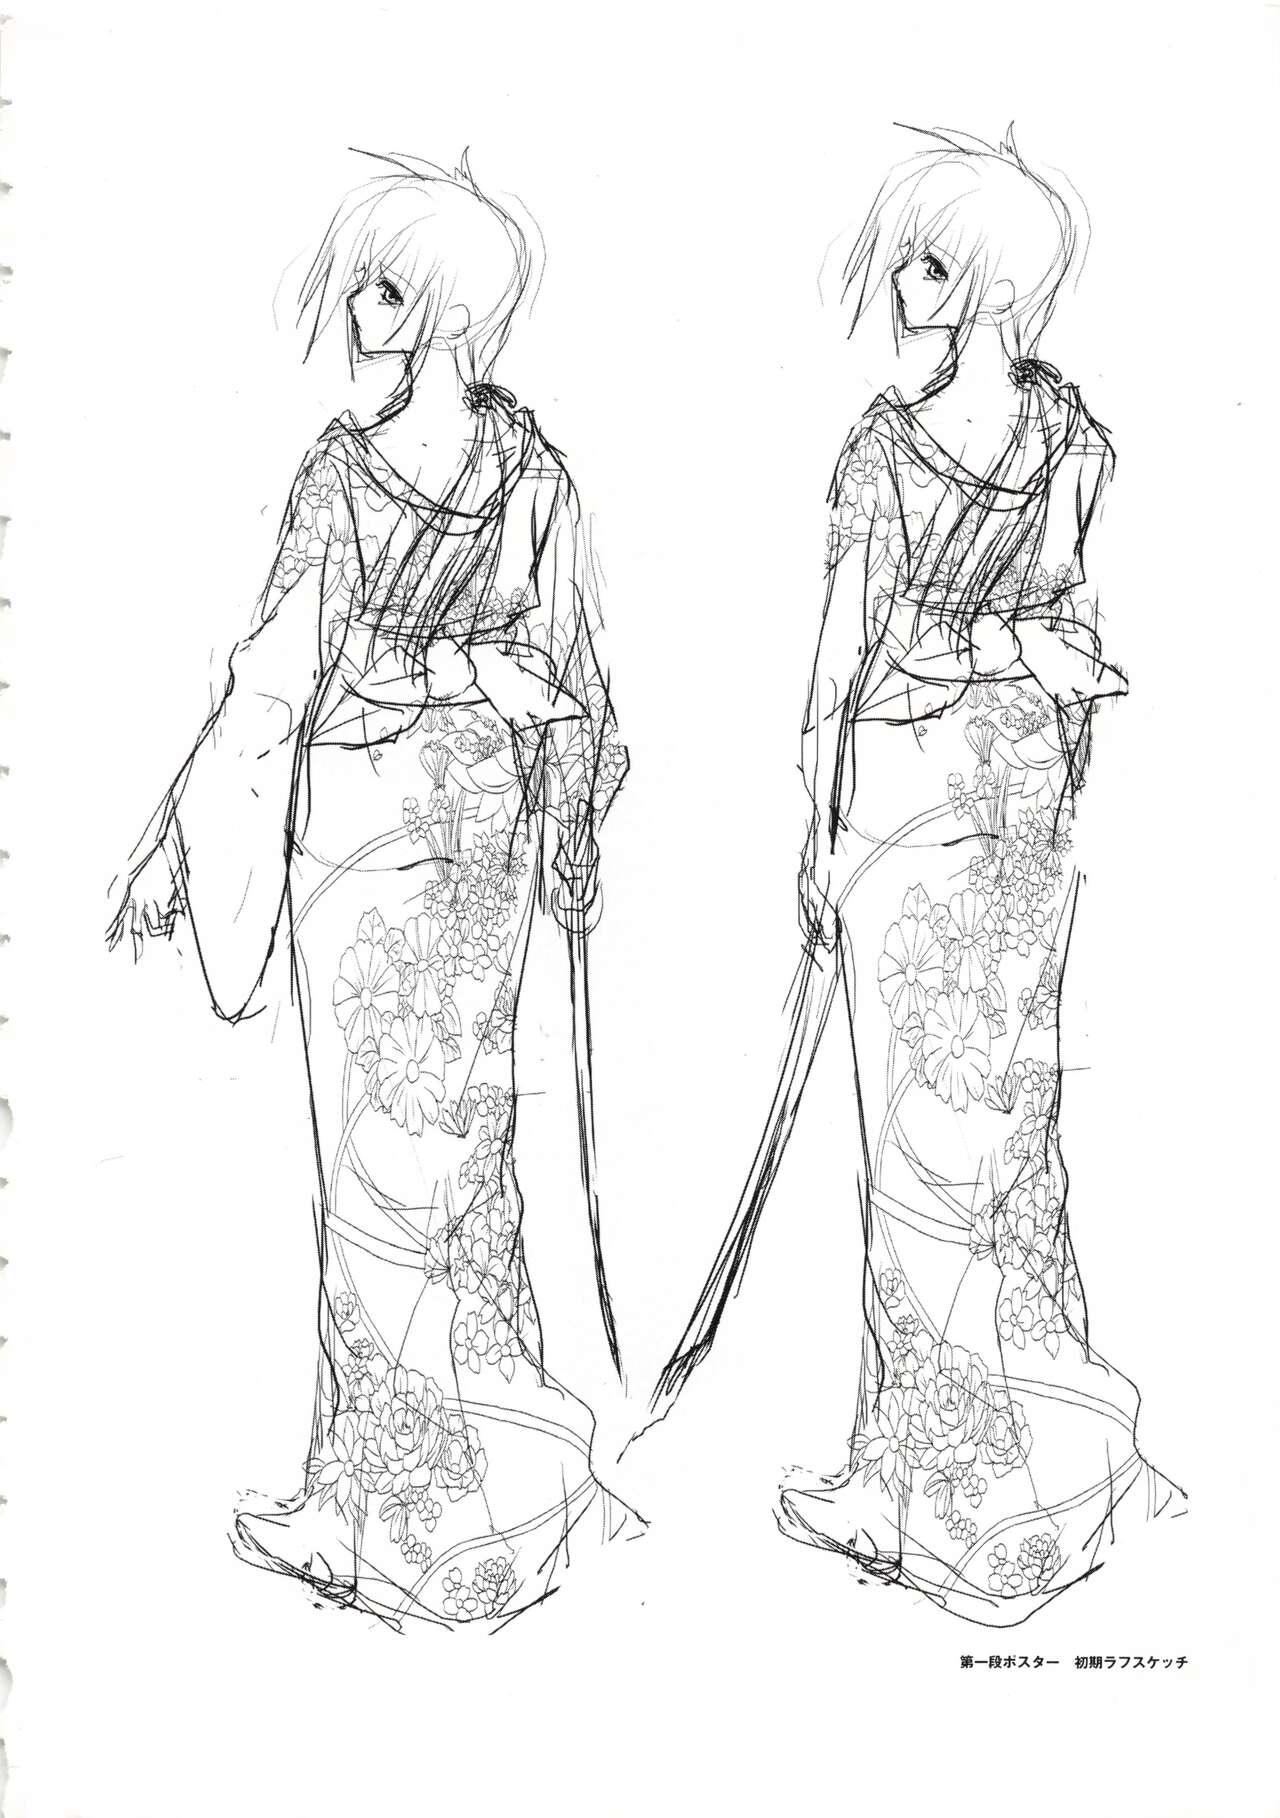 Hanachirasu - Initial Sketches and Unprocessed Illustrations - Selection 3